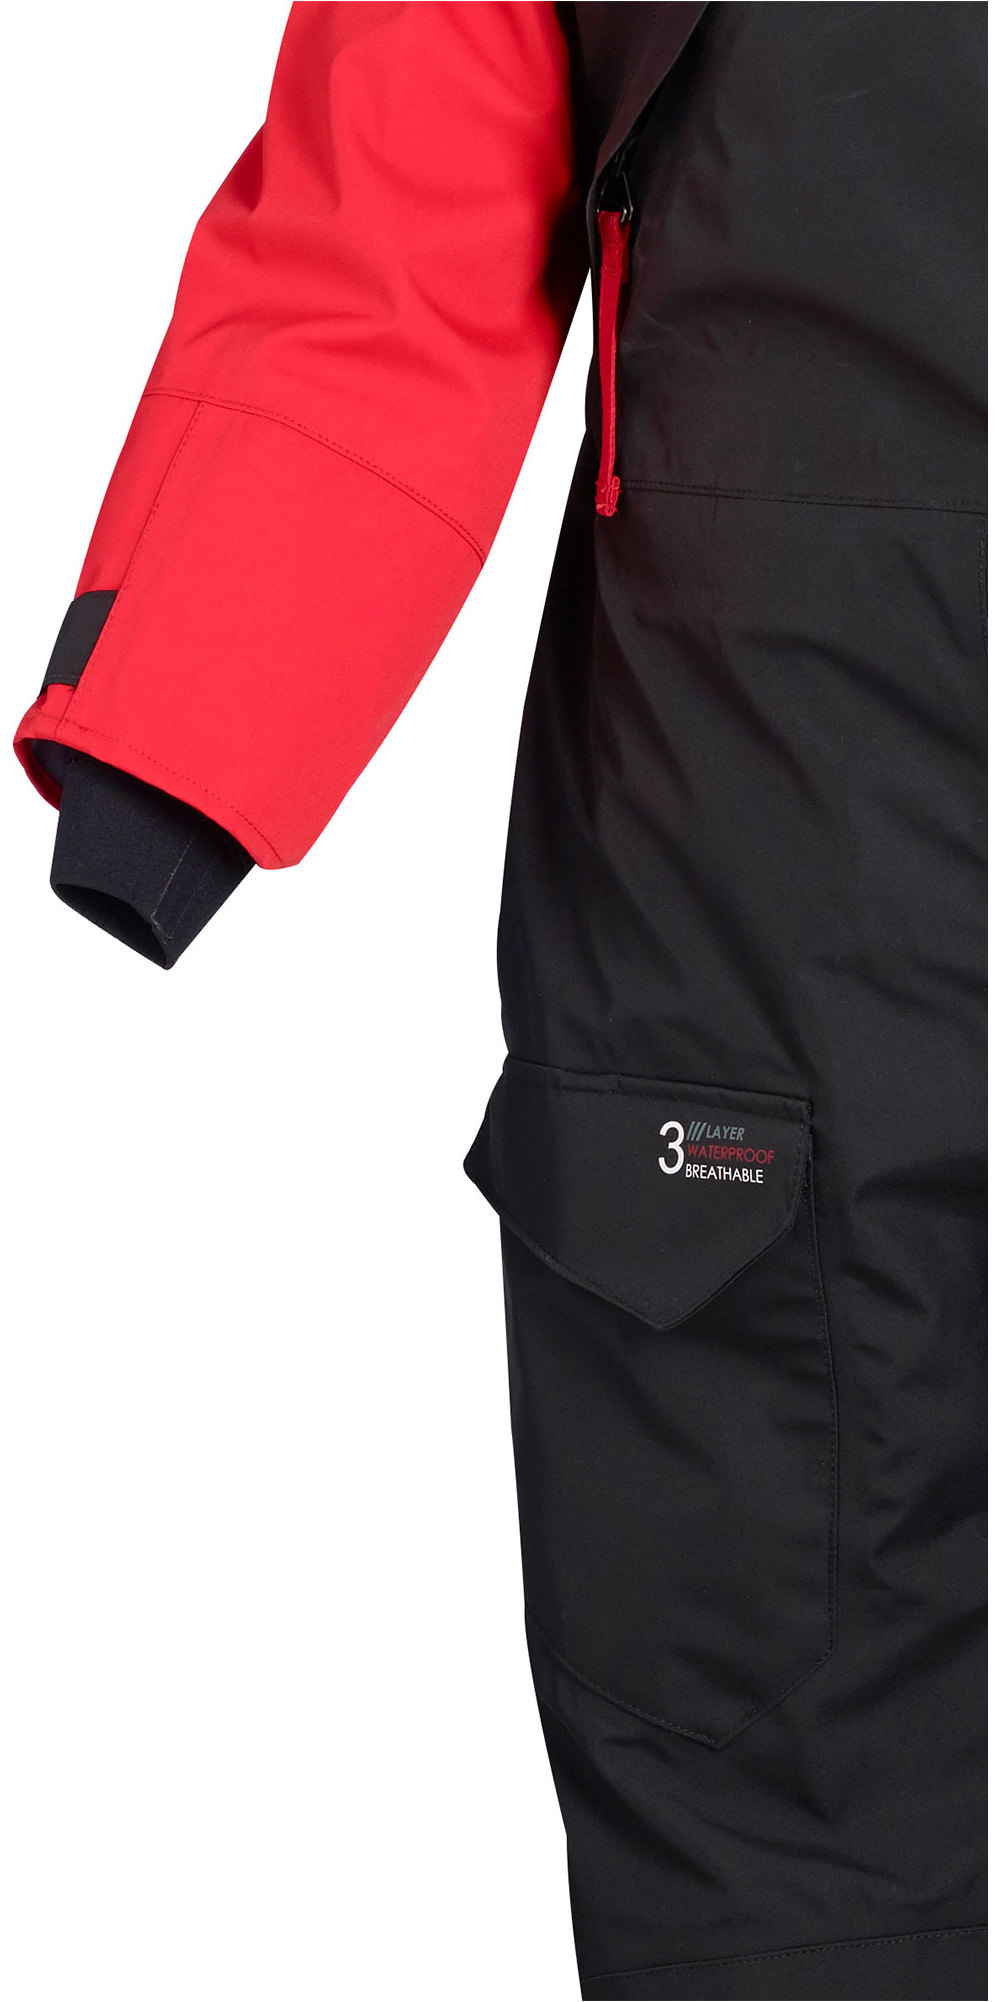 2019 Crewsaver Atacama Sport Drysuit INCLUDING UNDERSUIT RED / BLACK ...